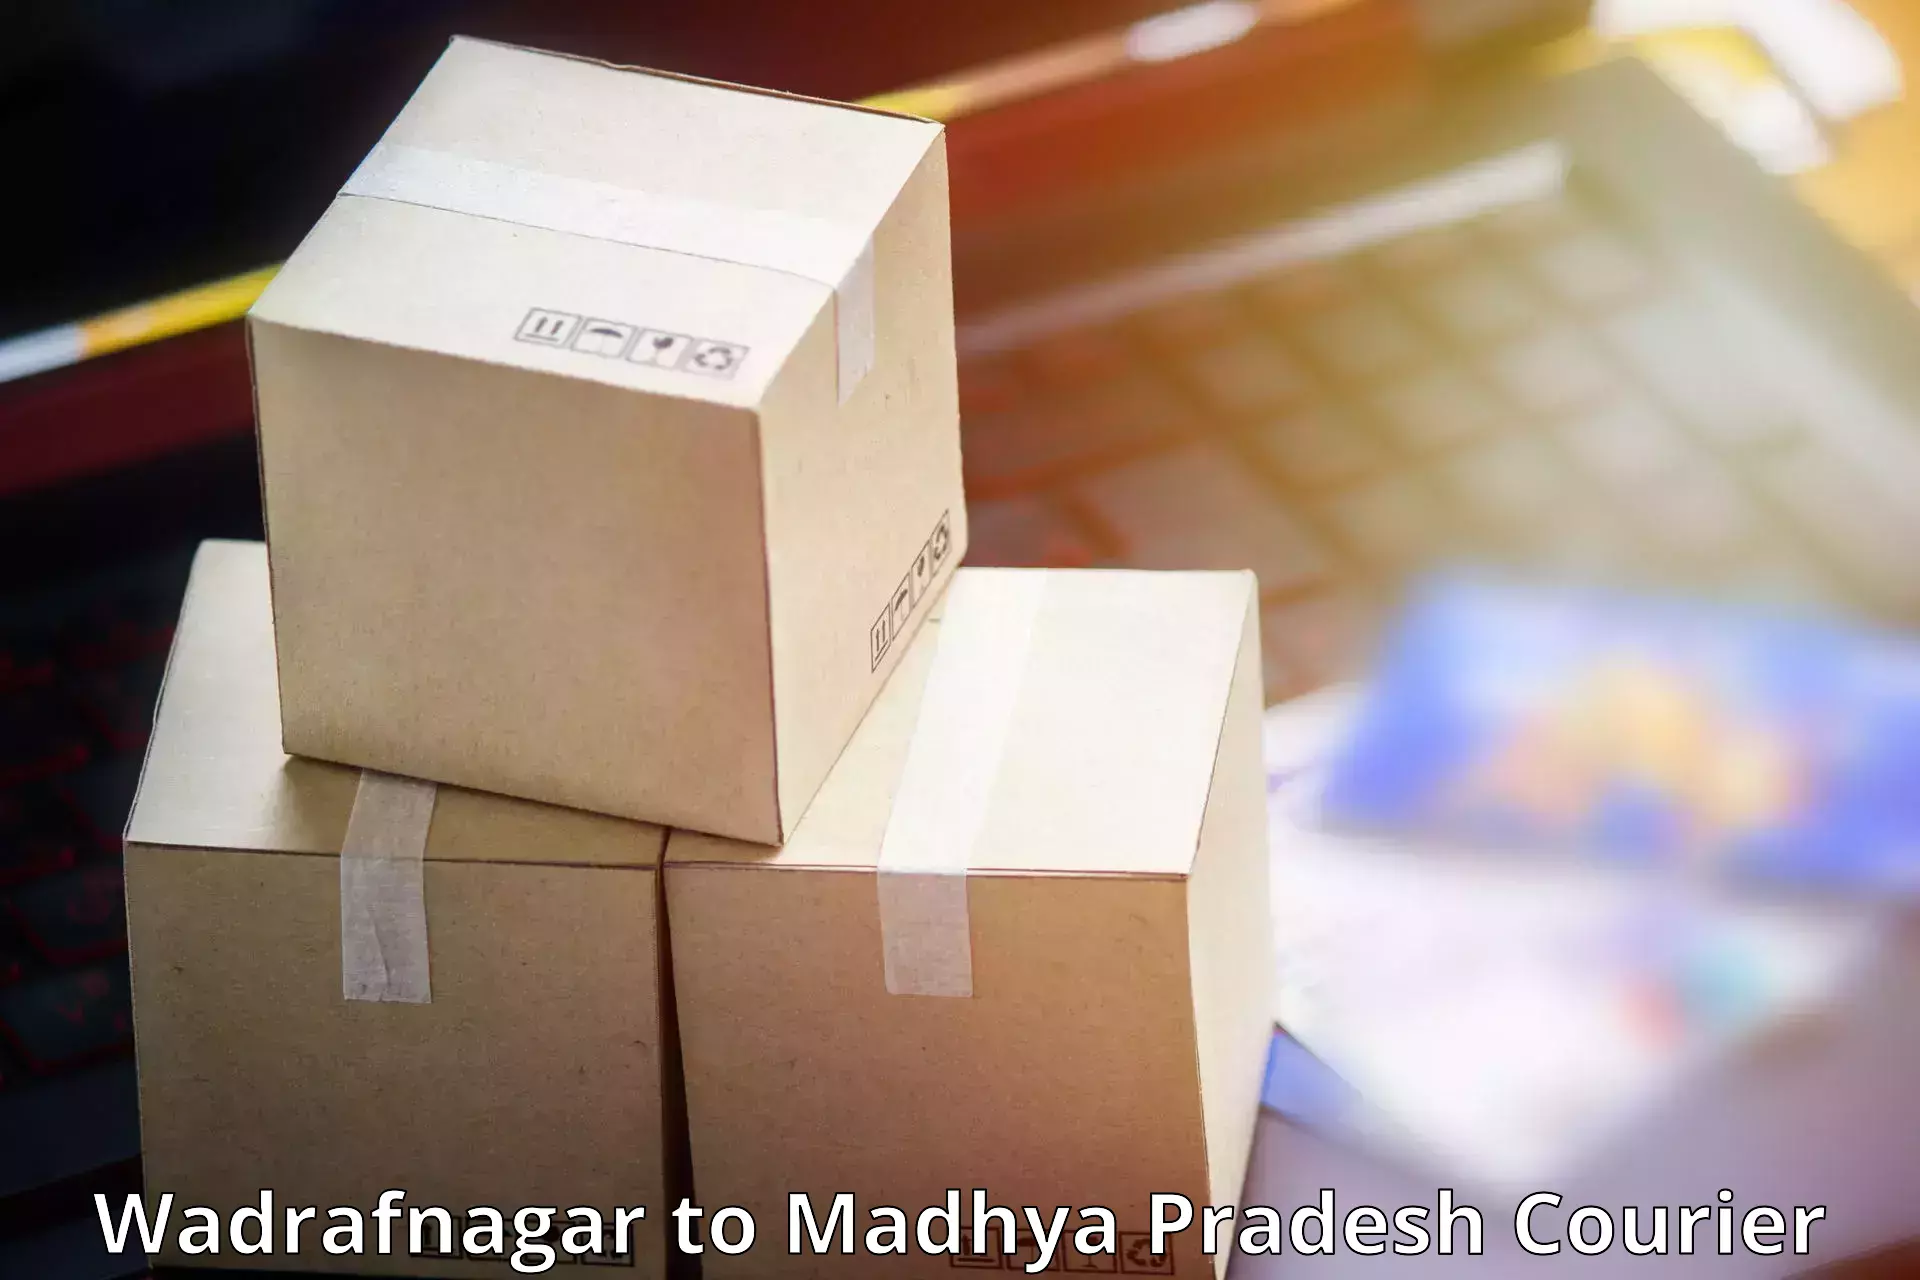 Courier service innovation Wadrafnagar to Sihora